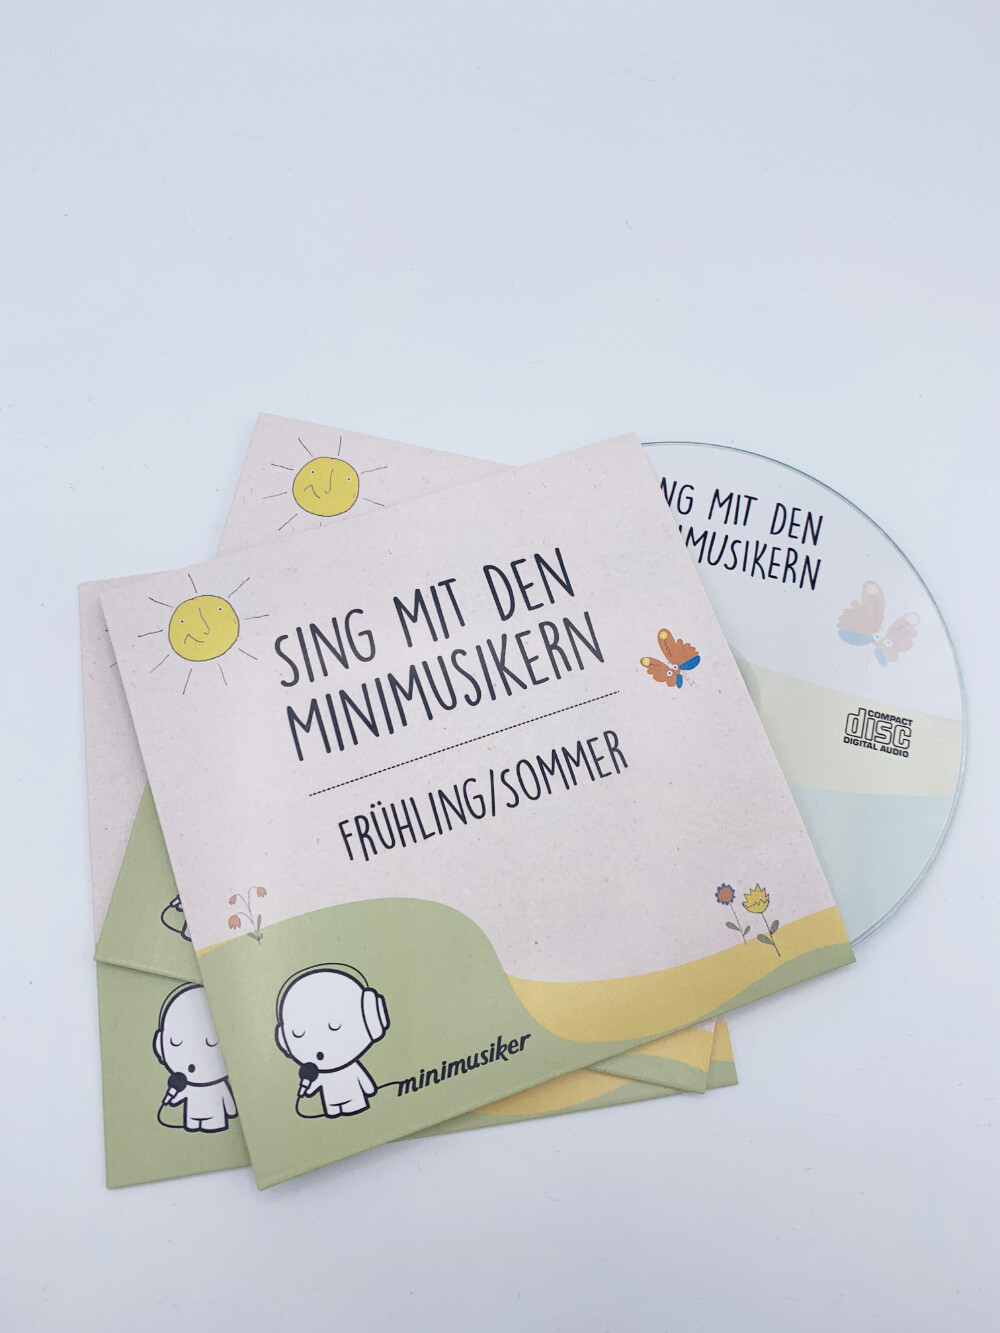 Sing mit den Minimusikern CD - Frühling / Sommer